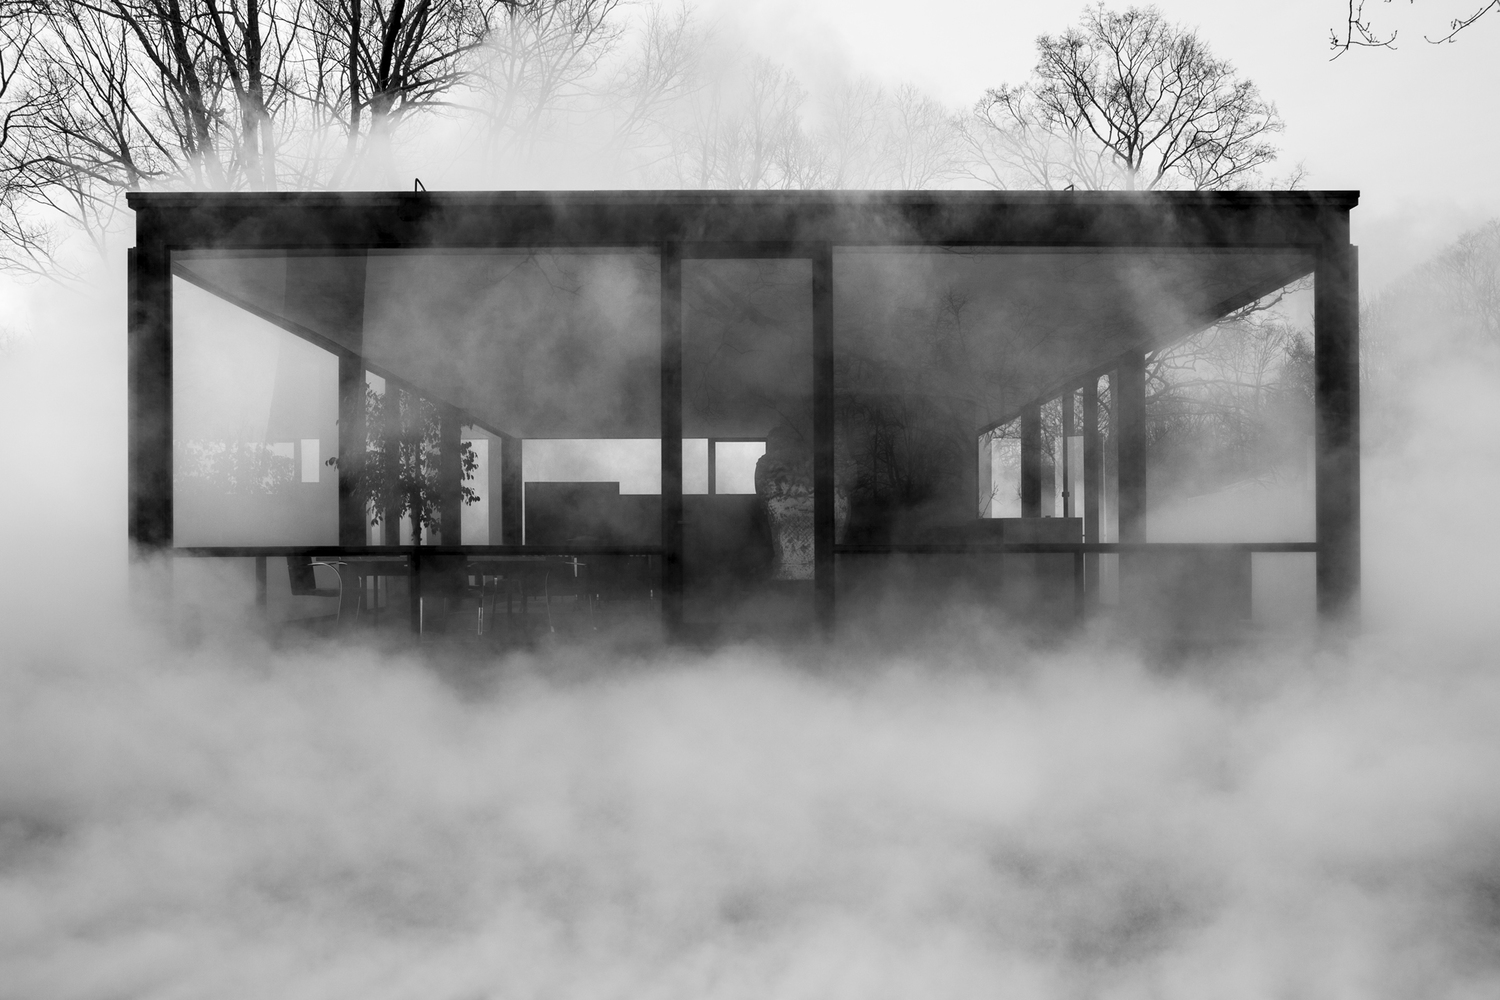  Fujiko Nakaya's Fog Installation